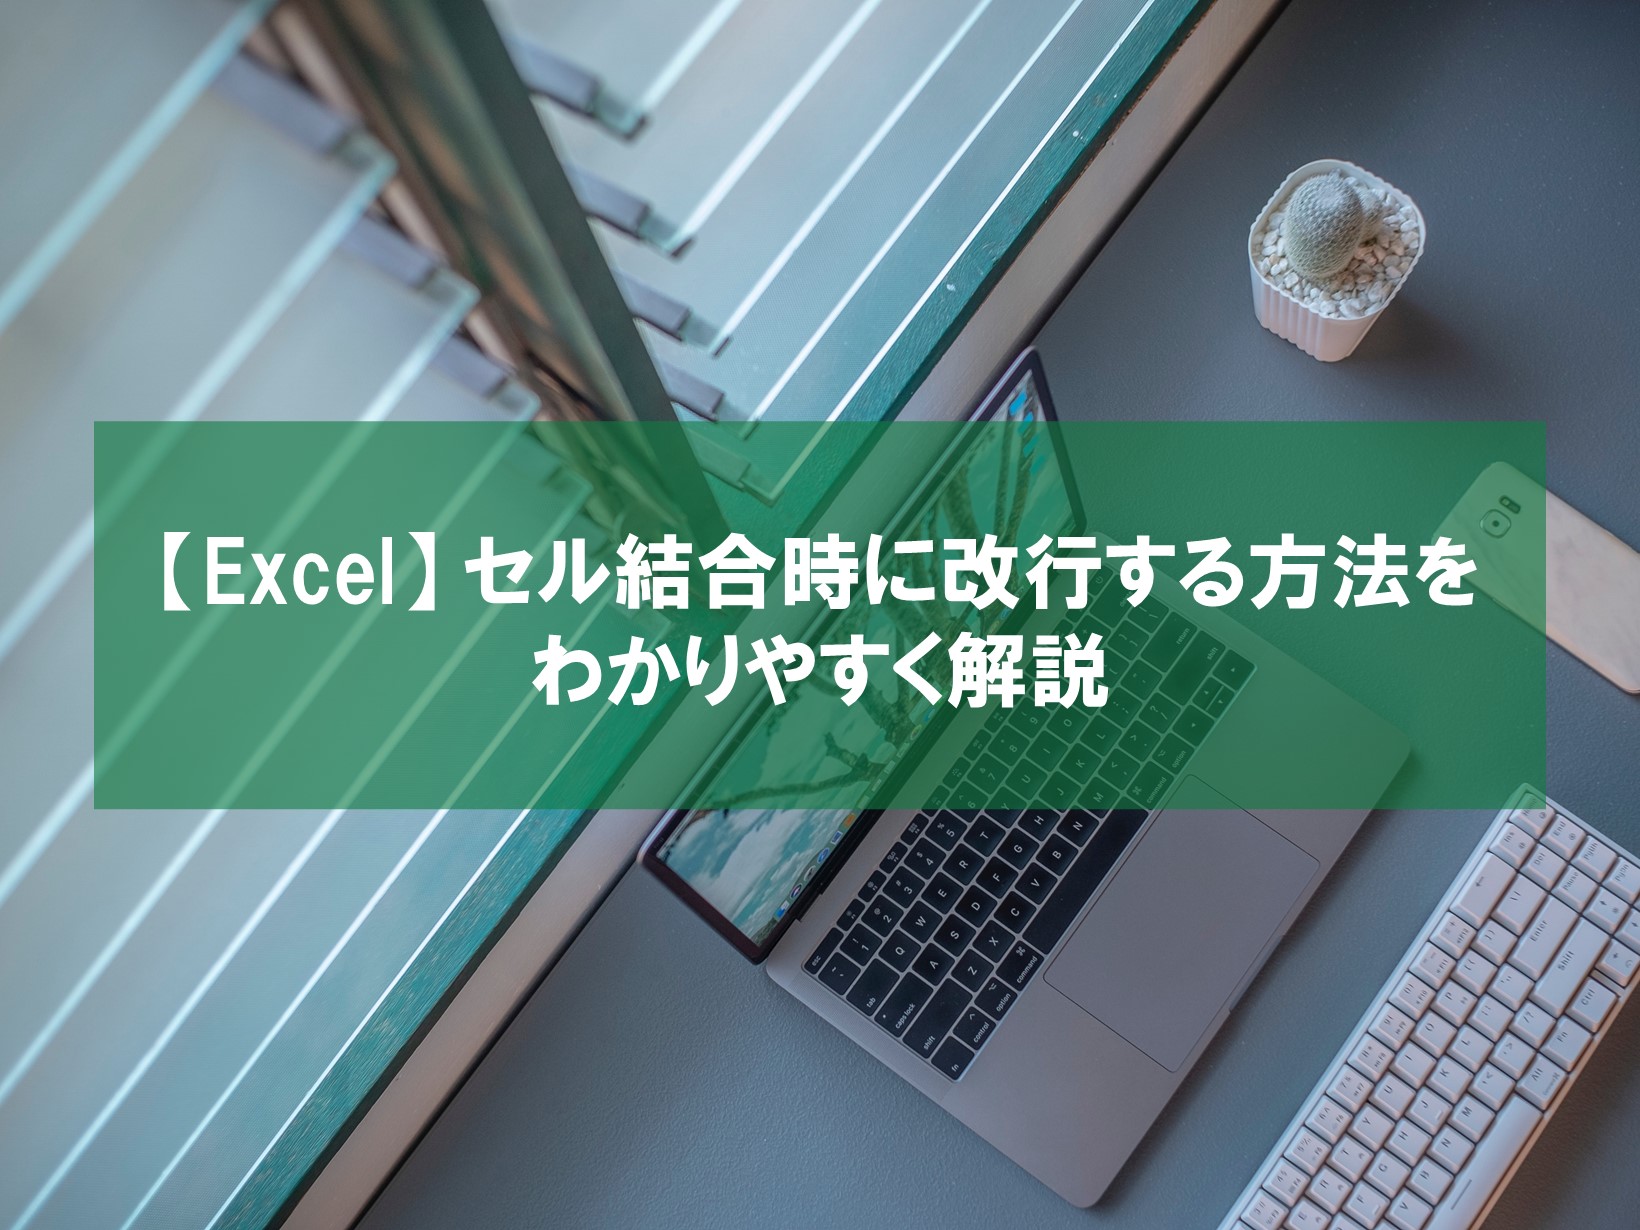 【Excel】セル結合時に改行する方法をわかりやすく解説